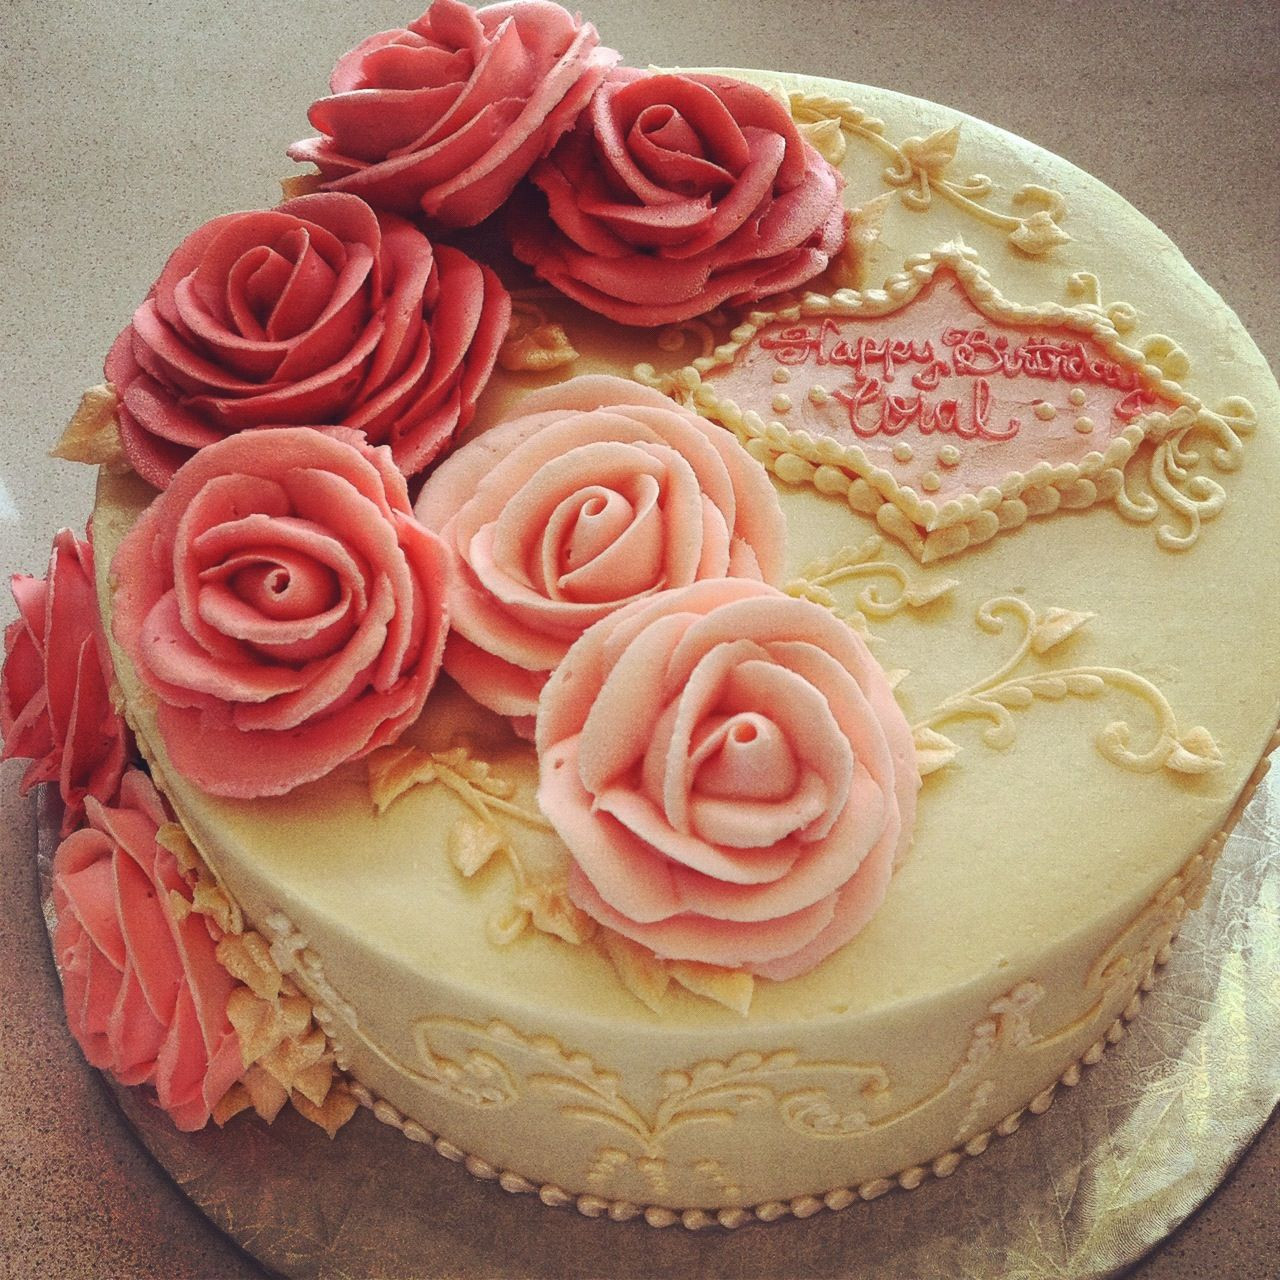 Rose Birthday Cake
 Best 25 Birthday cake roses ideas on Pinterest